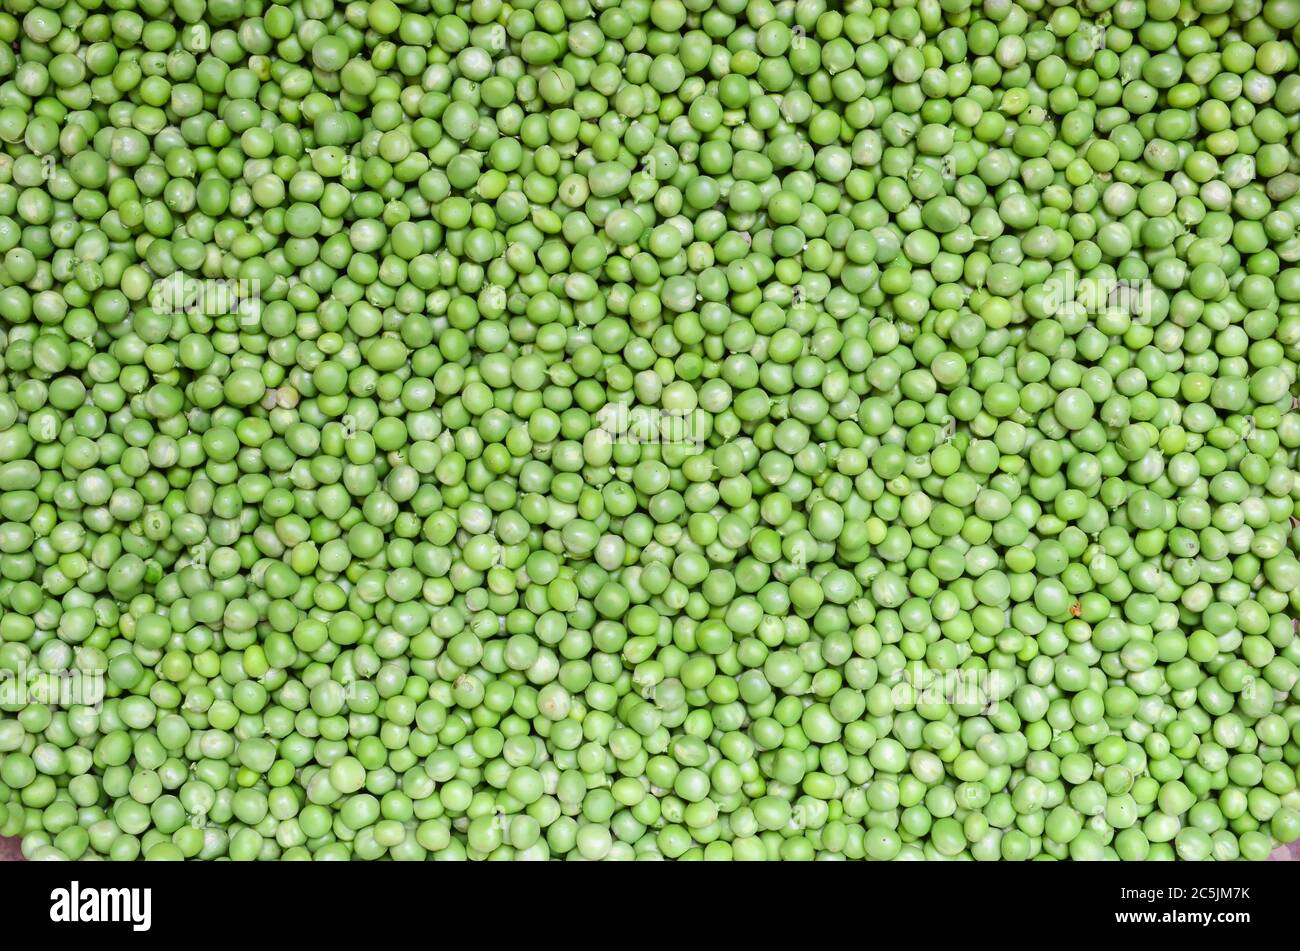 Peas background, full frame of fresh, shelled peas Stock Photo